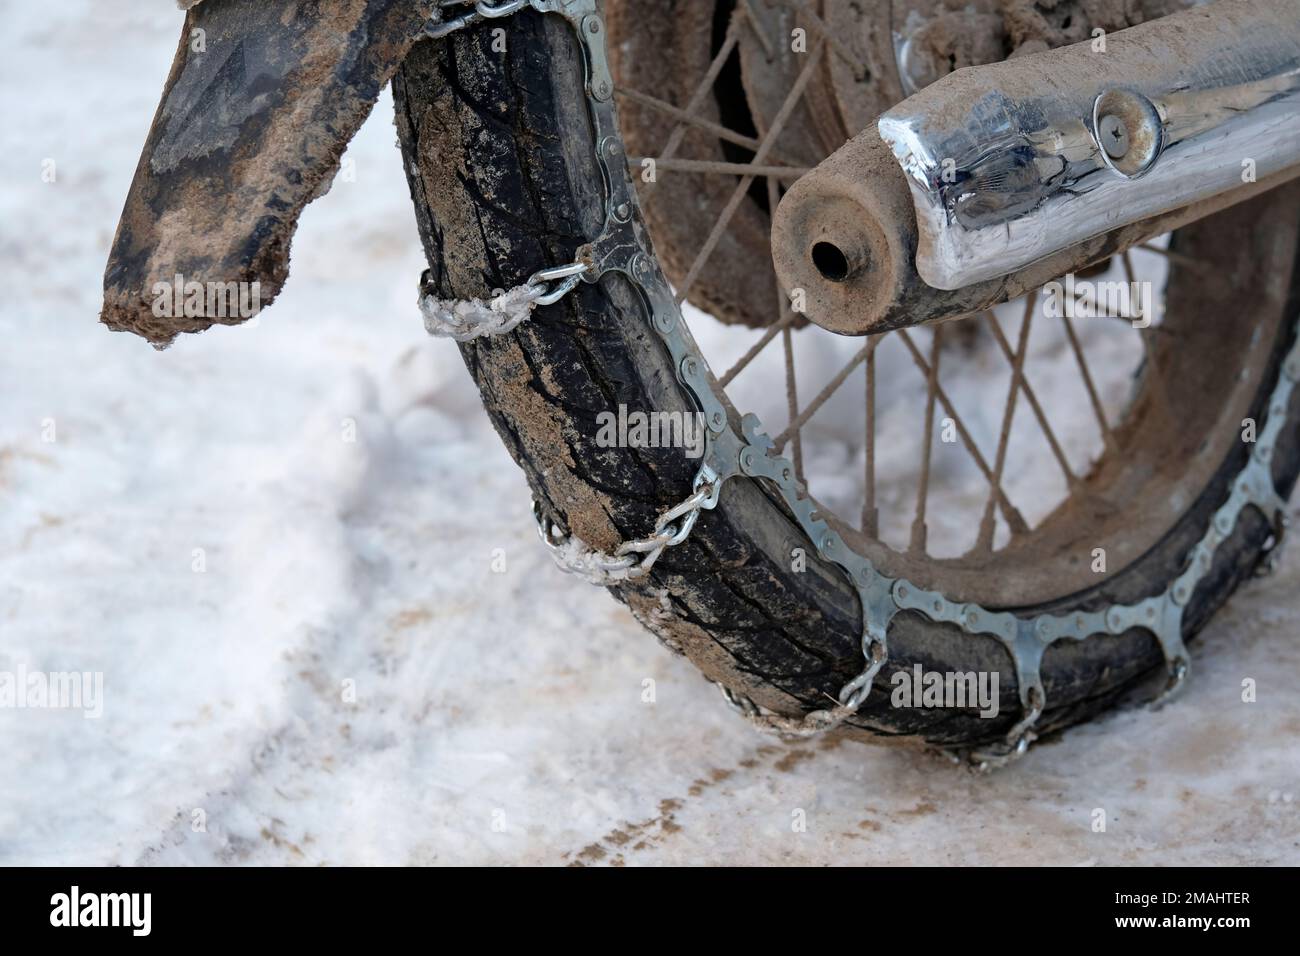 Motorrad mit SCHNEEKETTEN Stockfotografie - Alamy